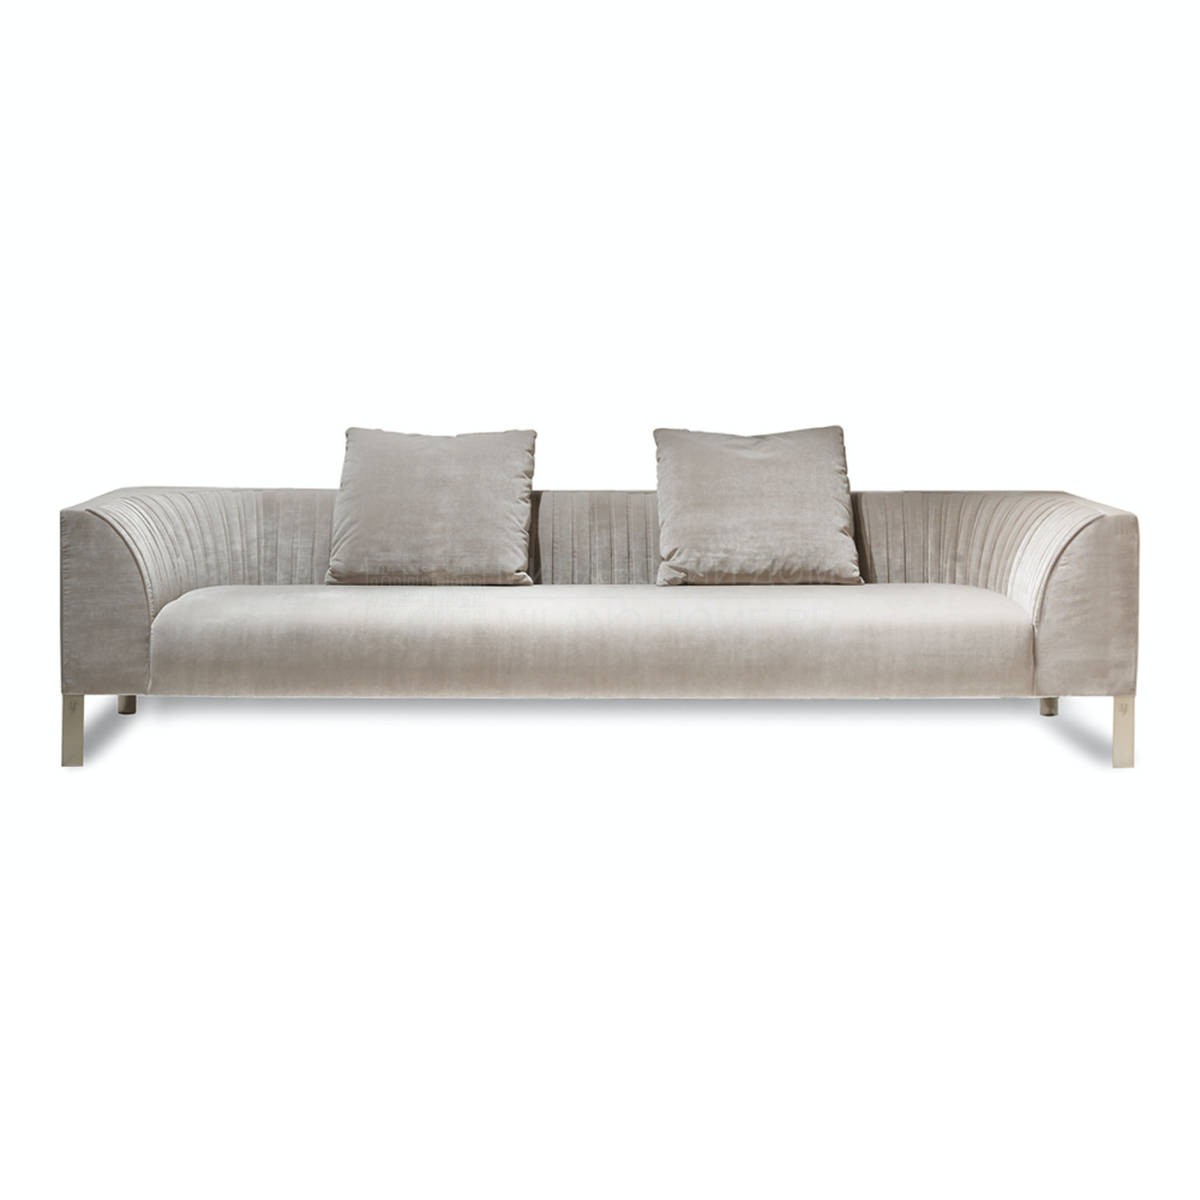 Прямой диван Capitol sofa из Италии фабрики IPE CAVALLI VISIONNAIRE